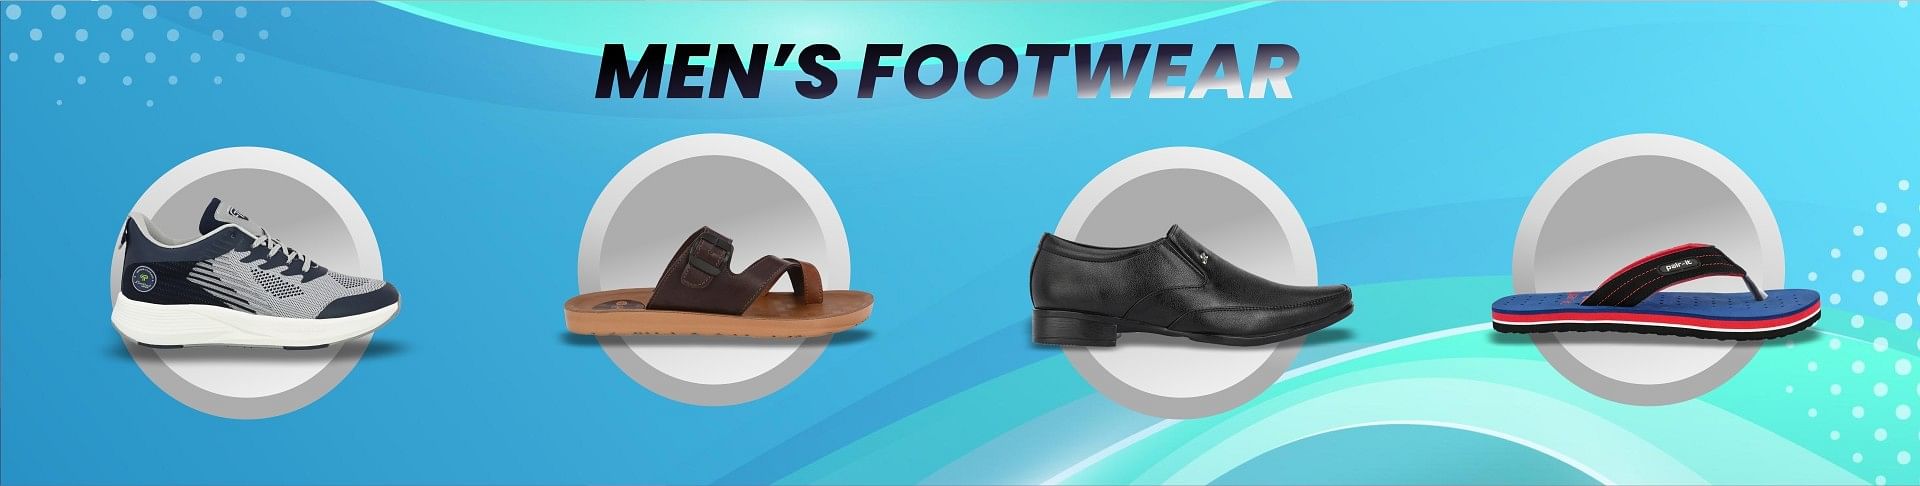 FOOTWEARS, Mens, Mn Sports Shoes